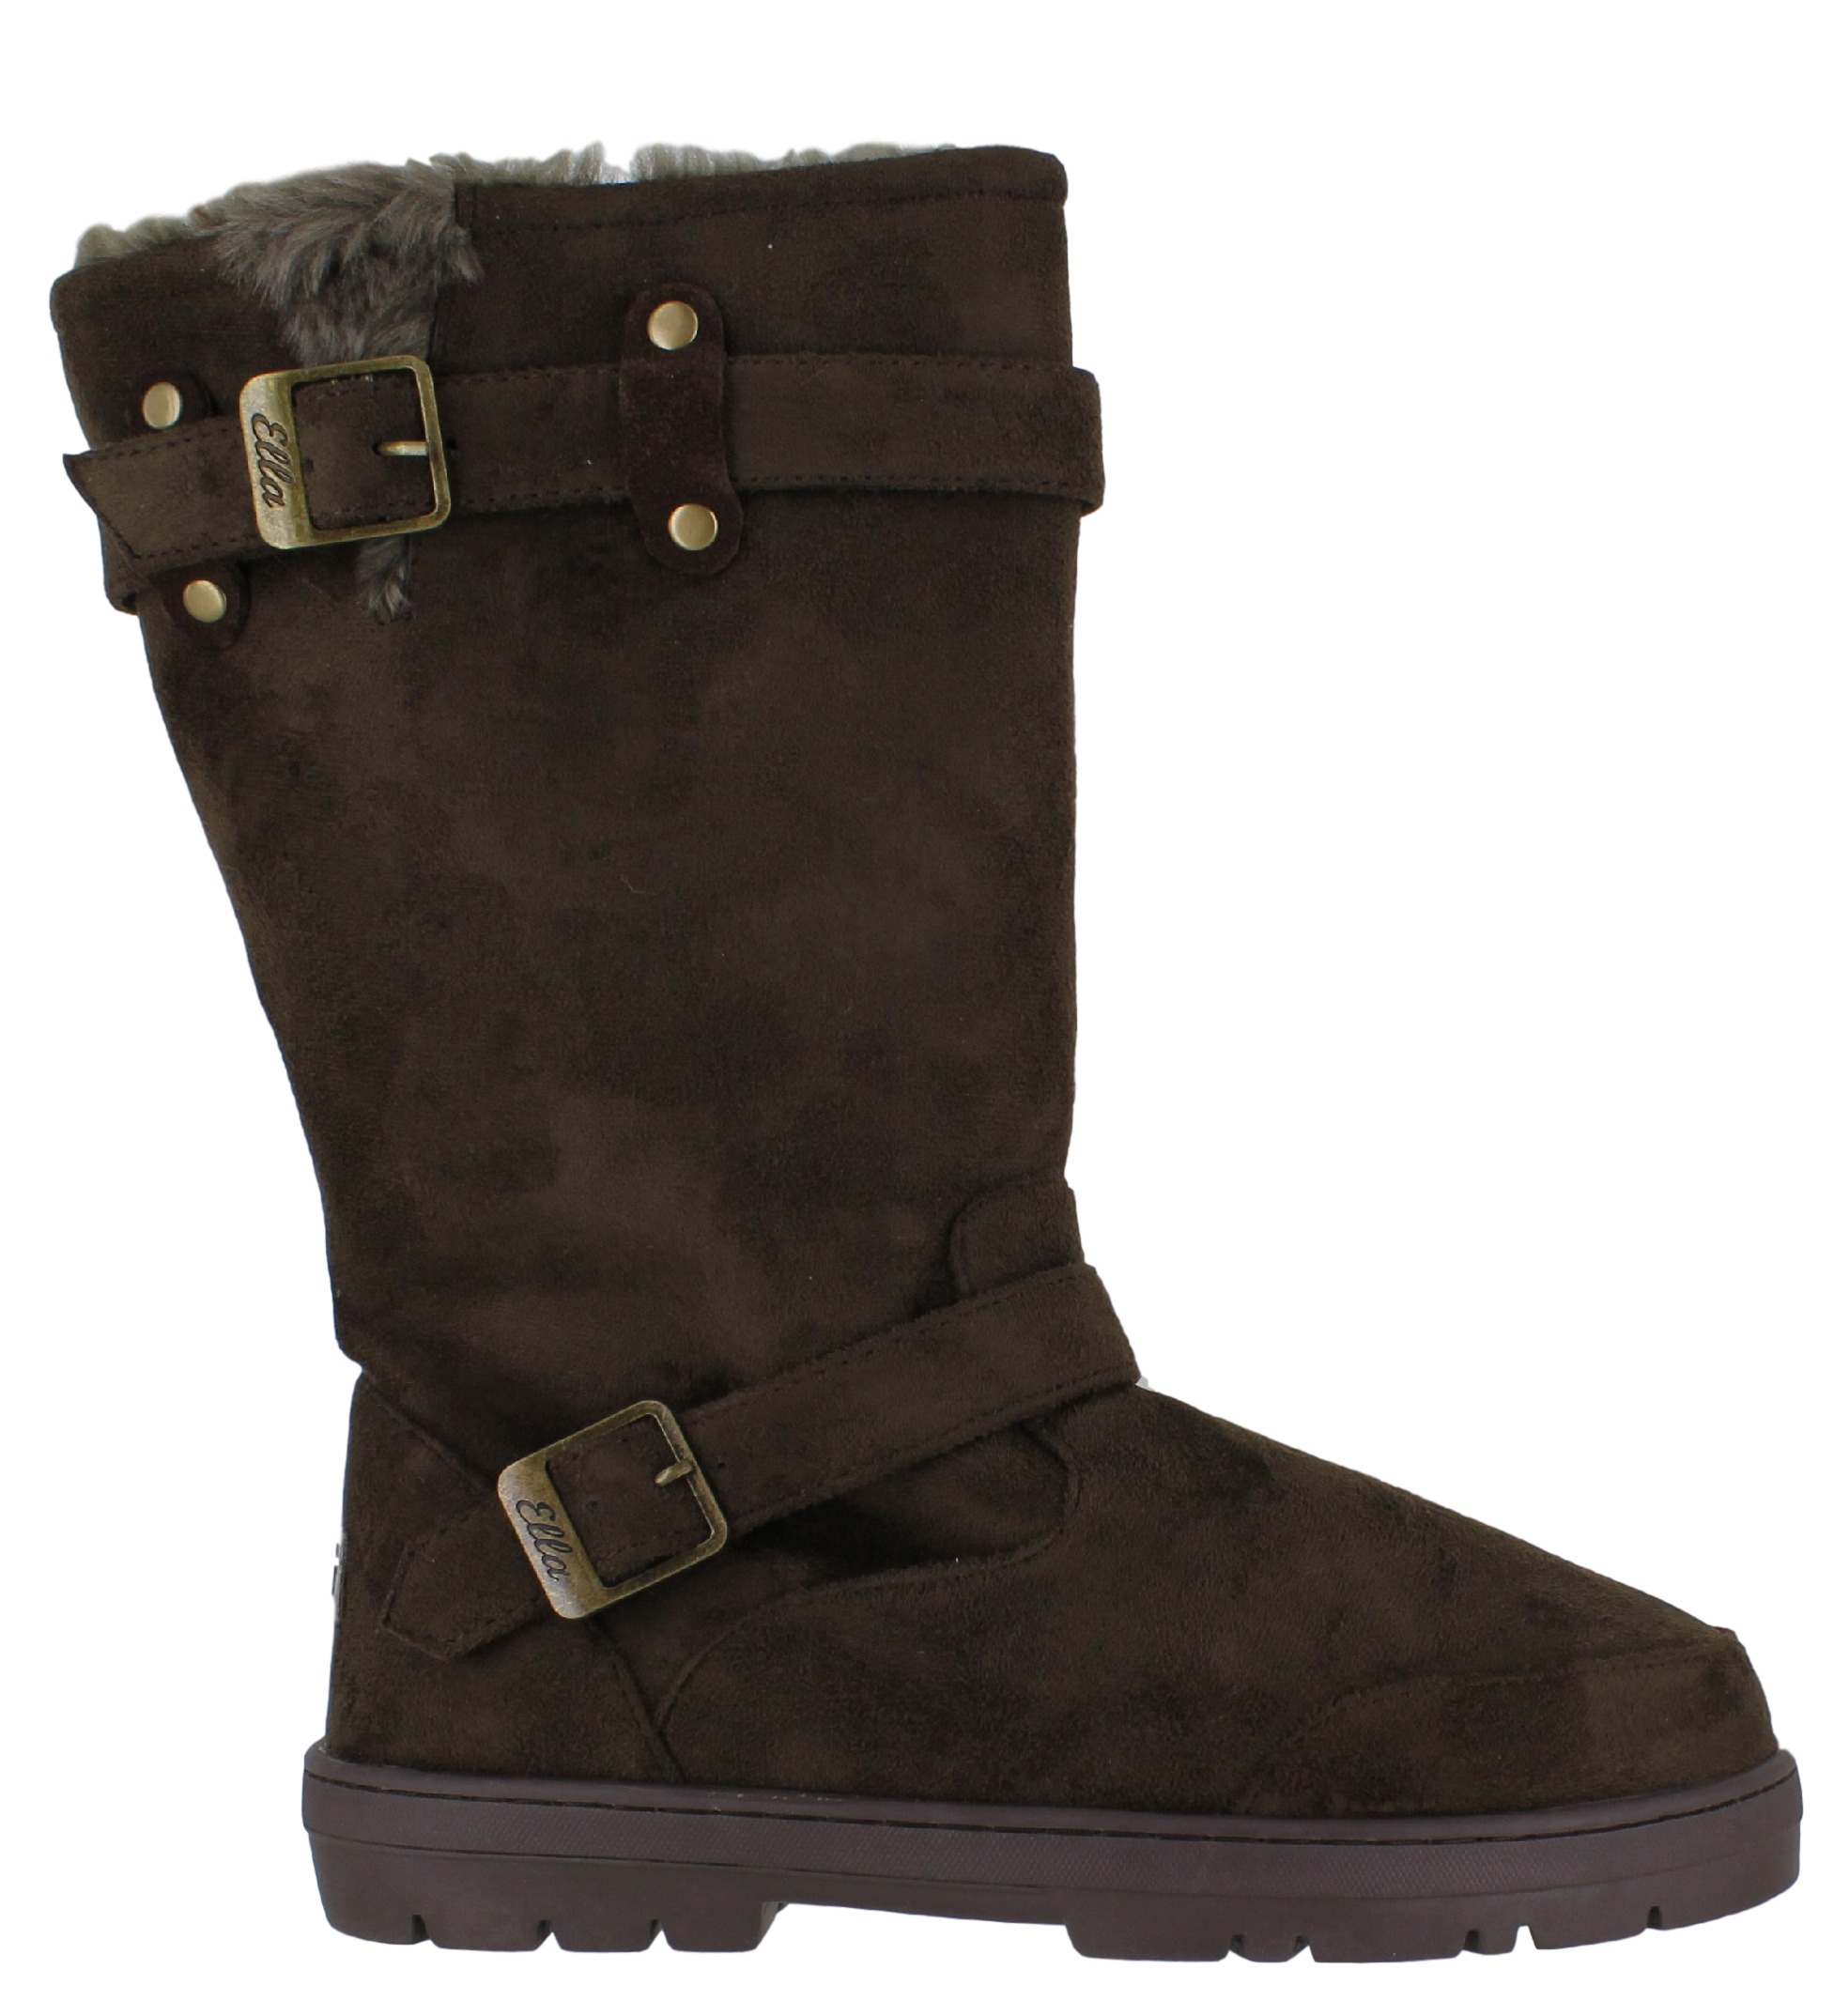 Womens ELLA Boots Faux Fur Winter Snow Warm Mid/High Leg Boots Sizes 3 ...